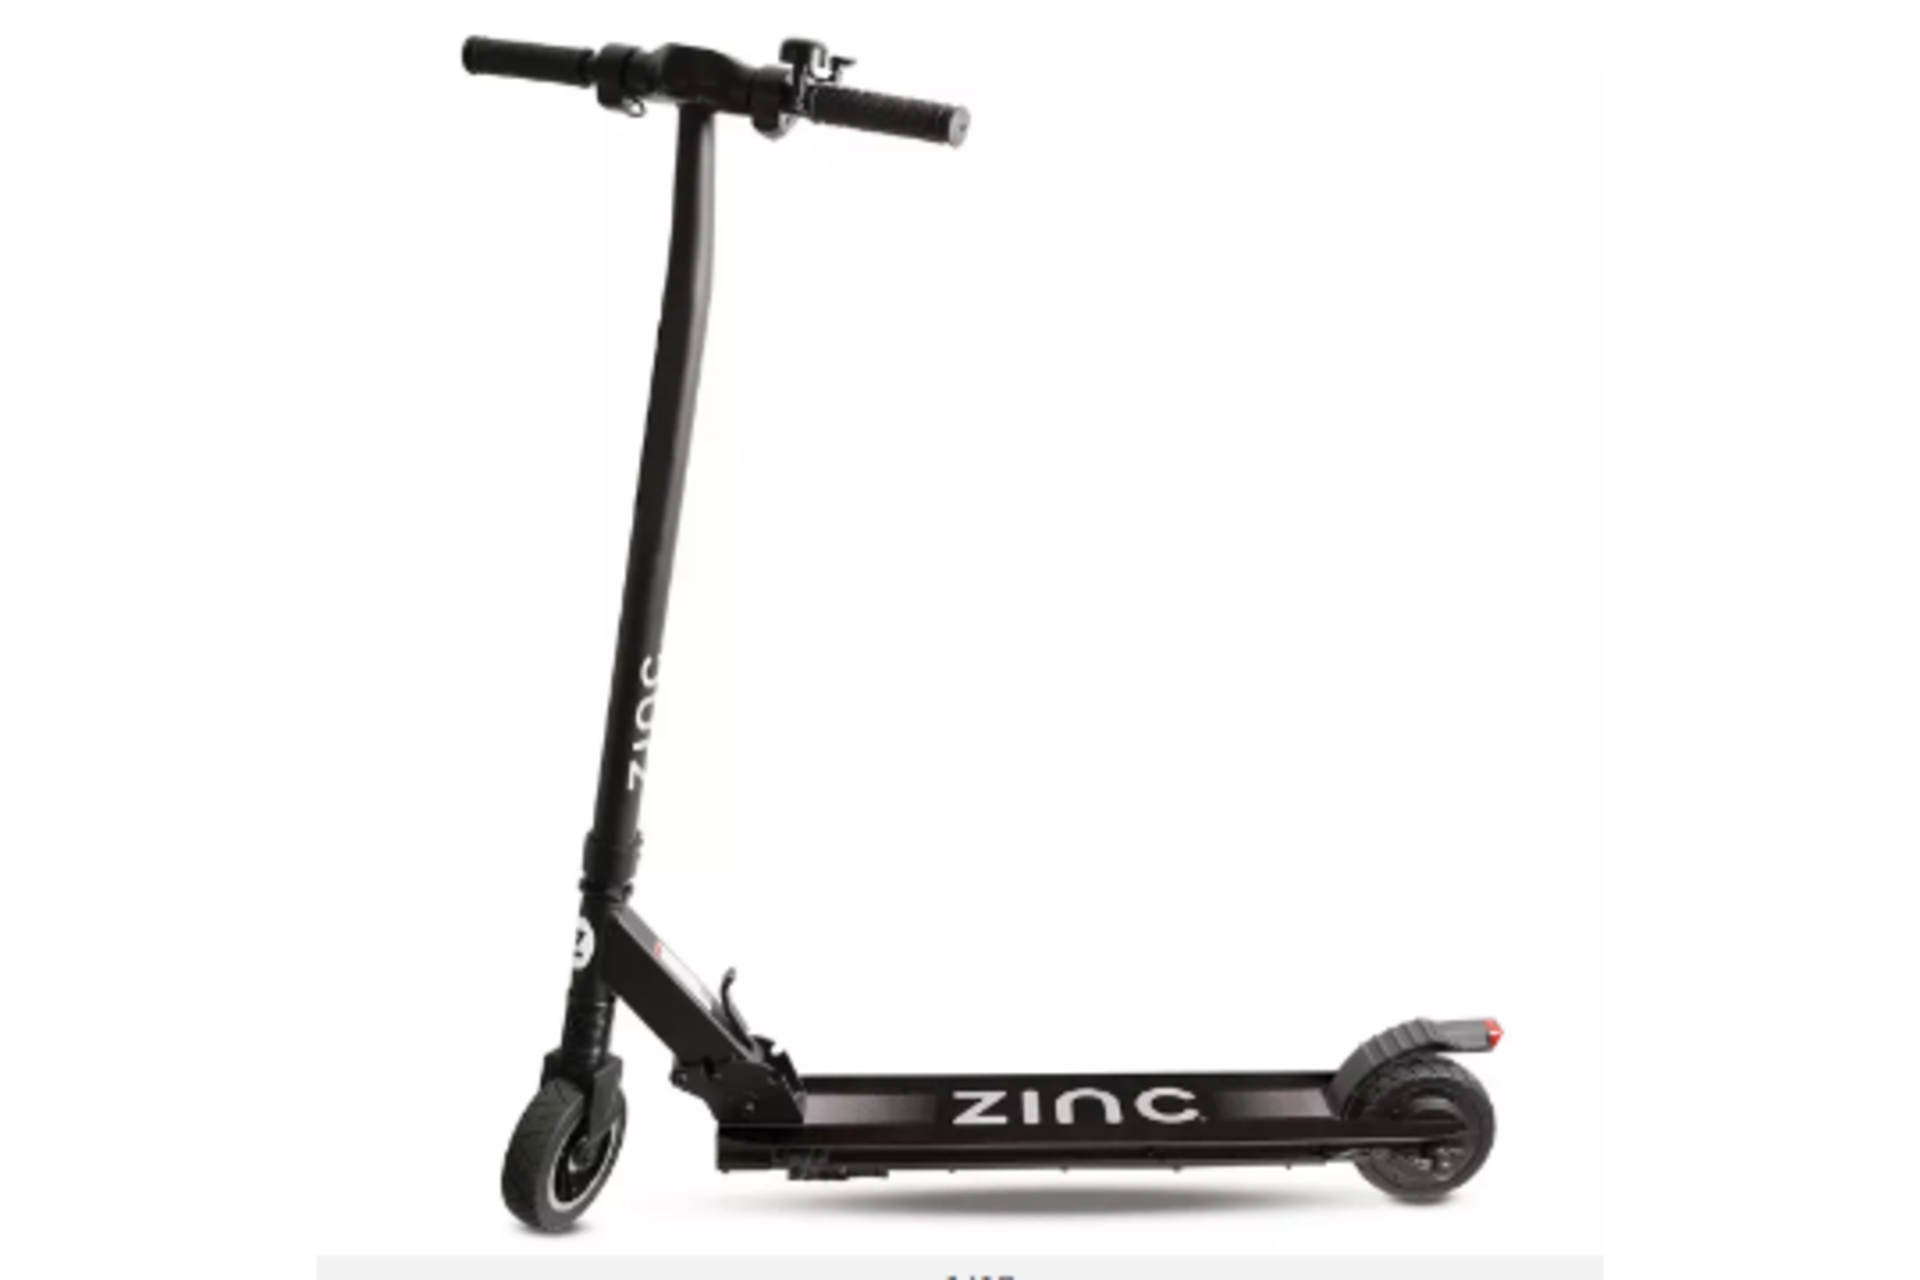 Zinc Flex Folding Electric Scooter. RRP £290.00. - BW. Introducing the Zinc Folding Electric Flex